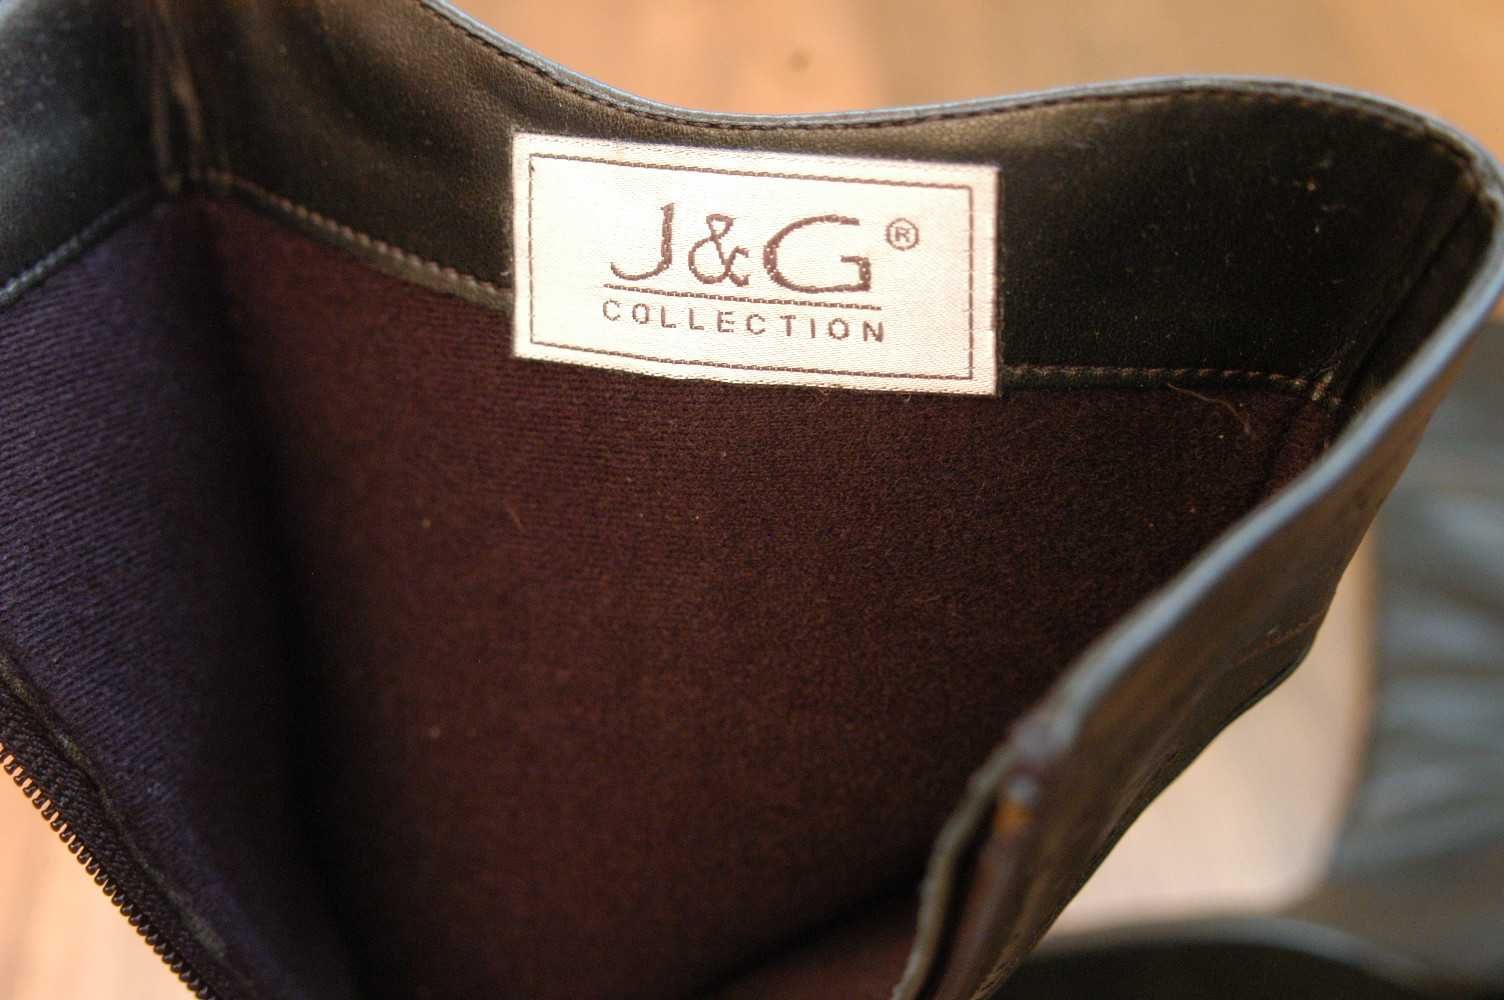 czarne skórzane kozaki J&G Collection - rozmiar 36